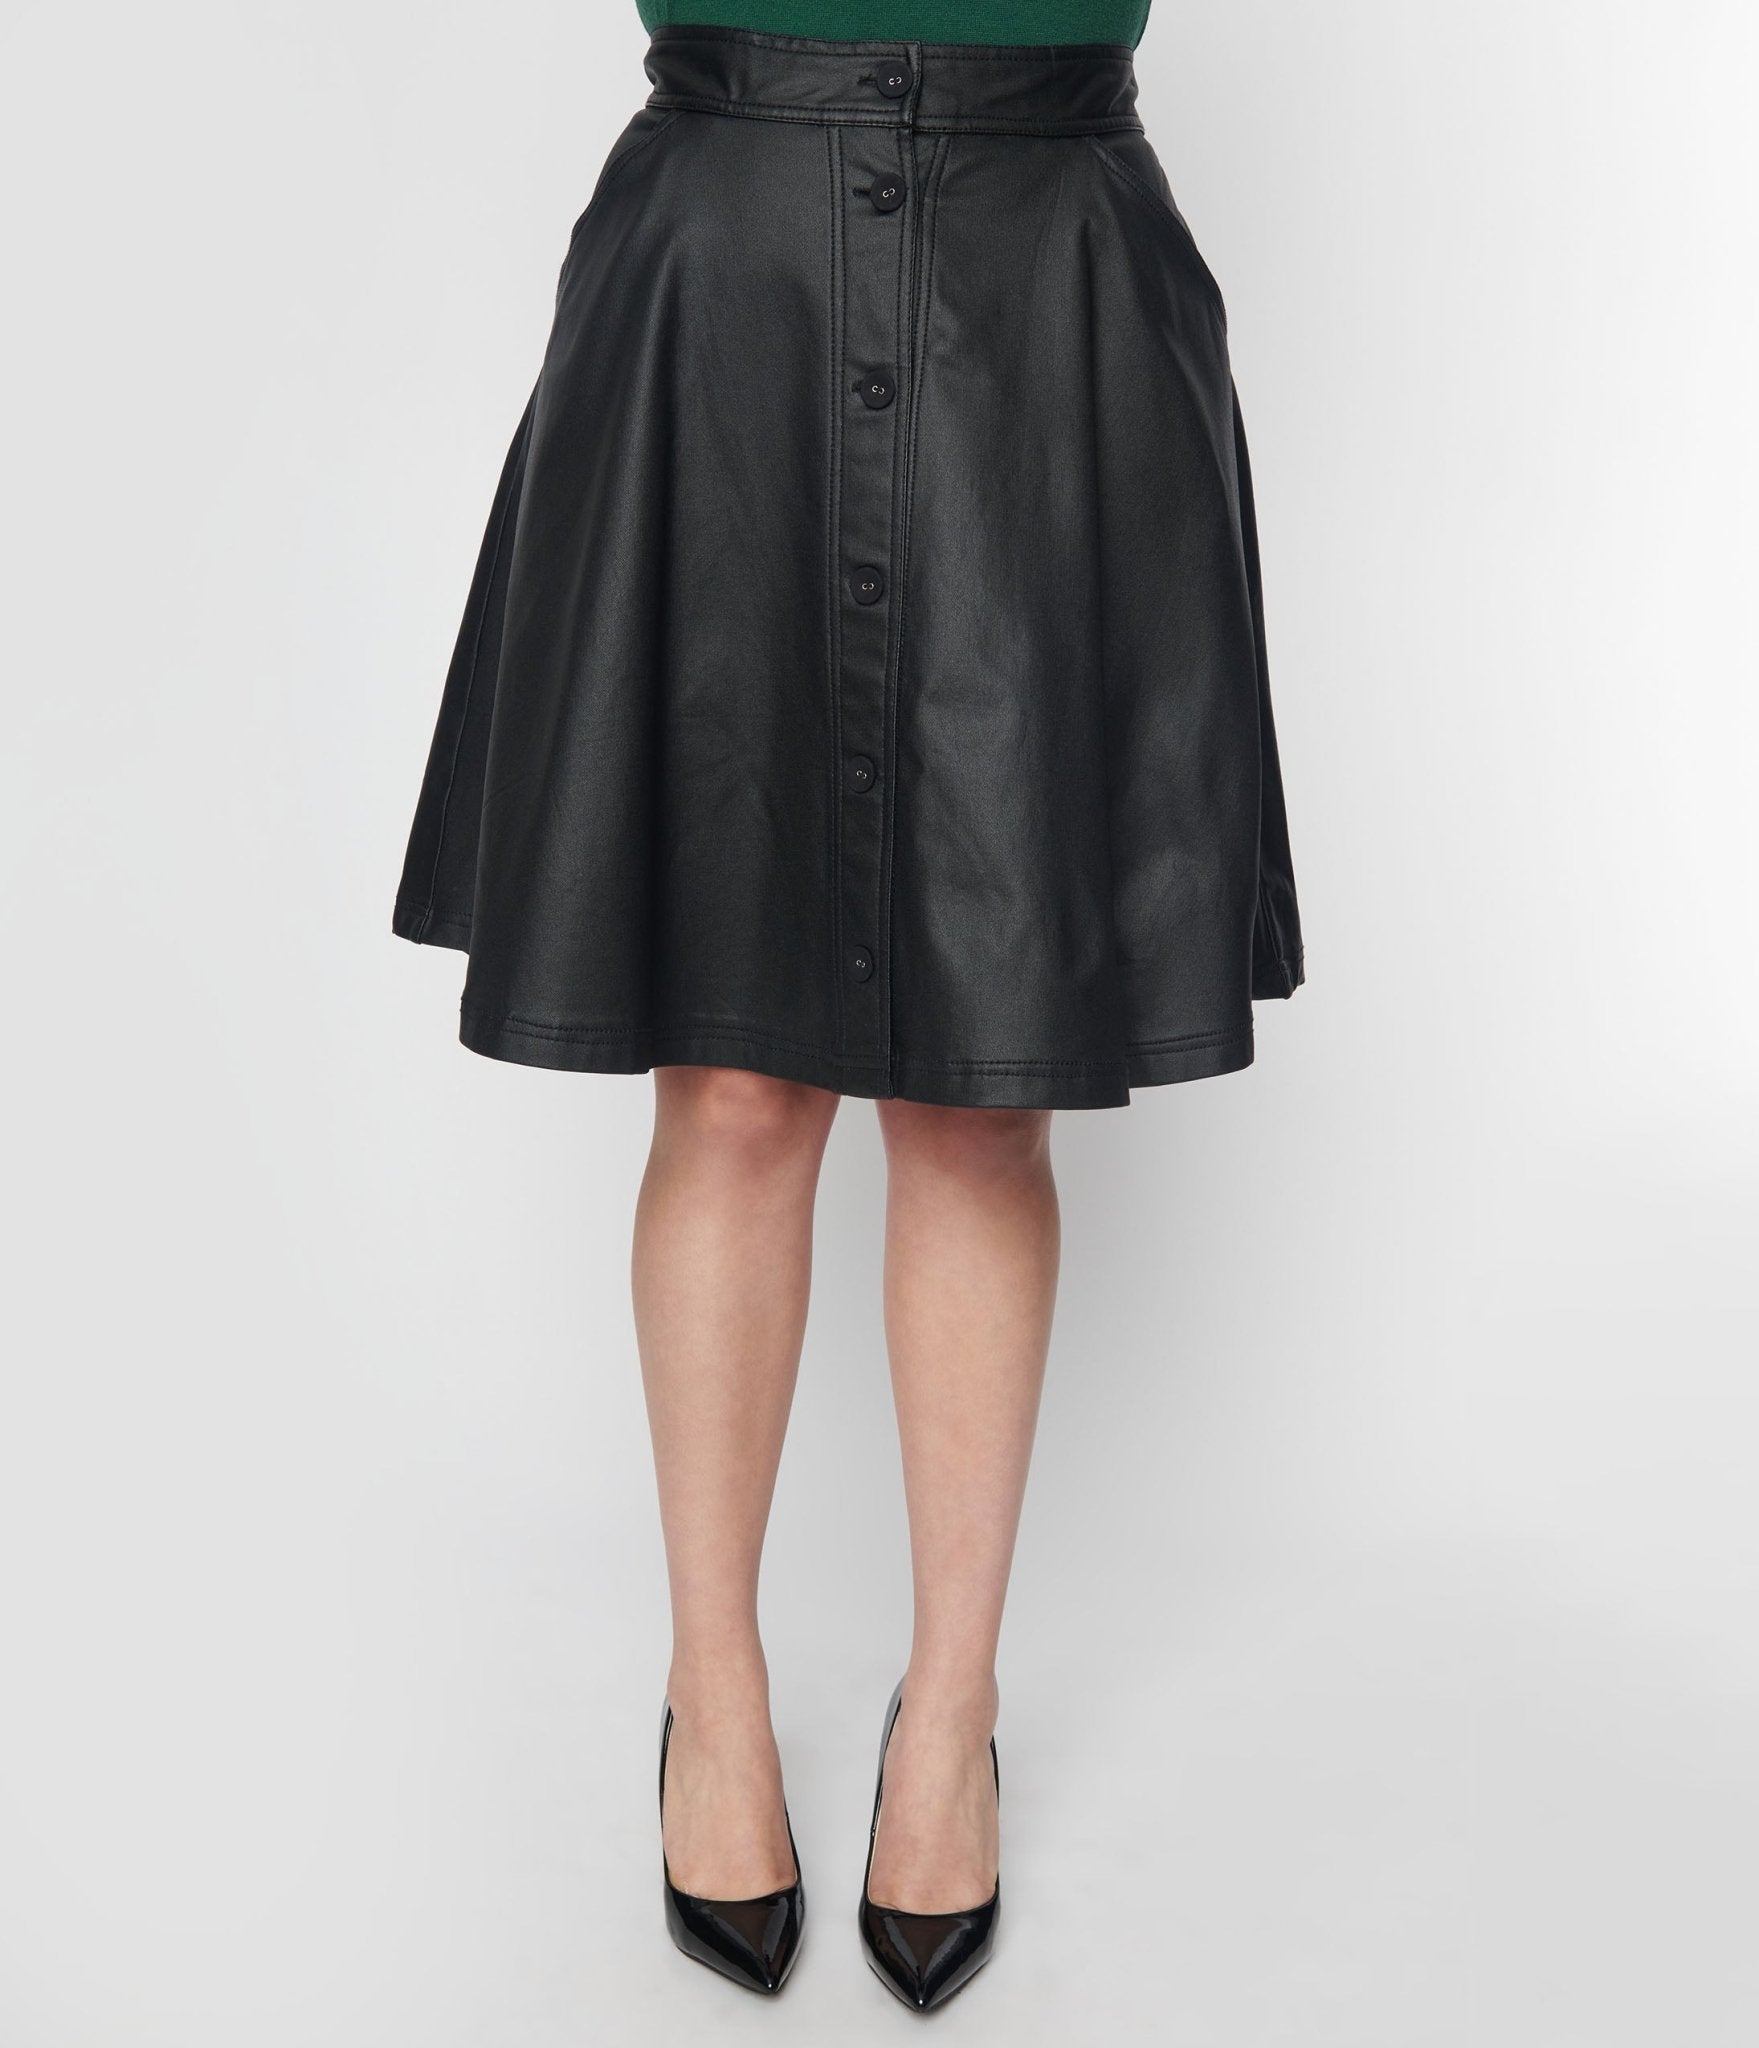 Unique Vintage Black Vegan Leather Flare Skirt